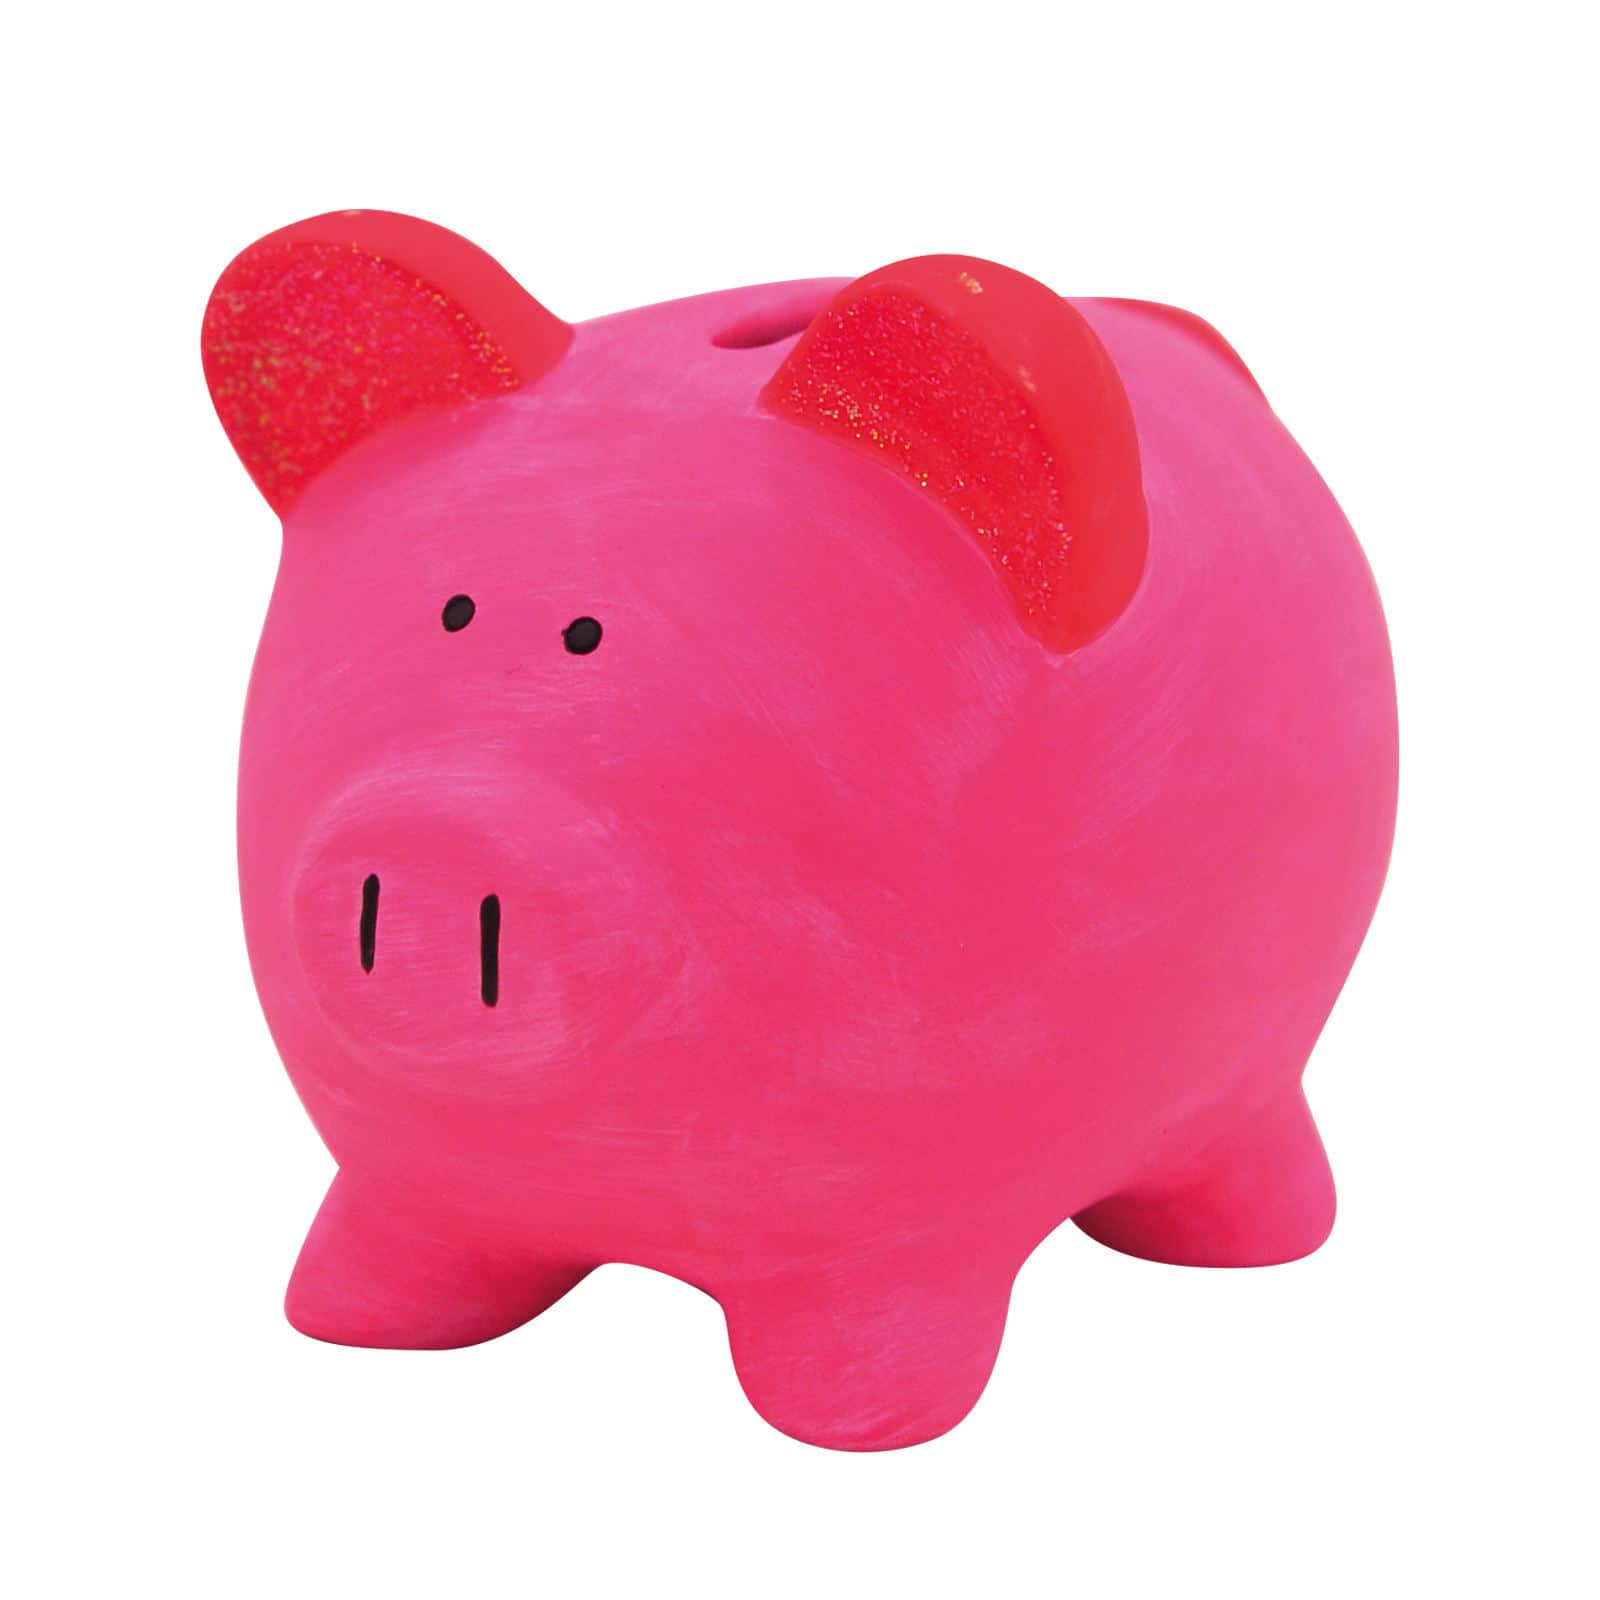 Paint Your Own Piggy Bank Ceramic Novelty Money Box Saving Kids Craft Gift 